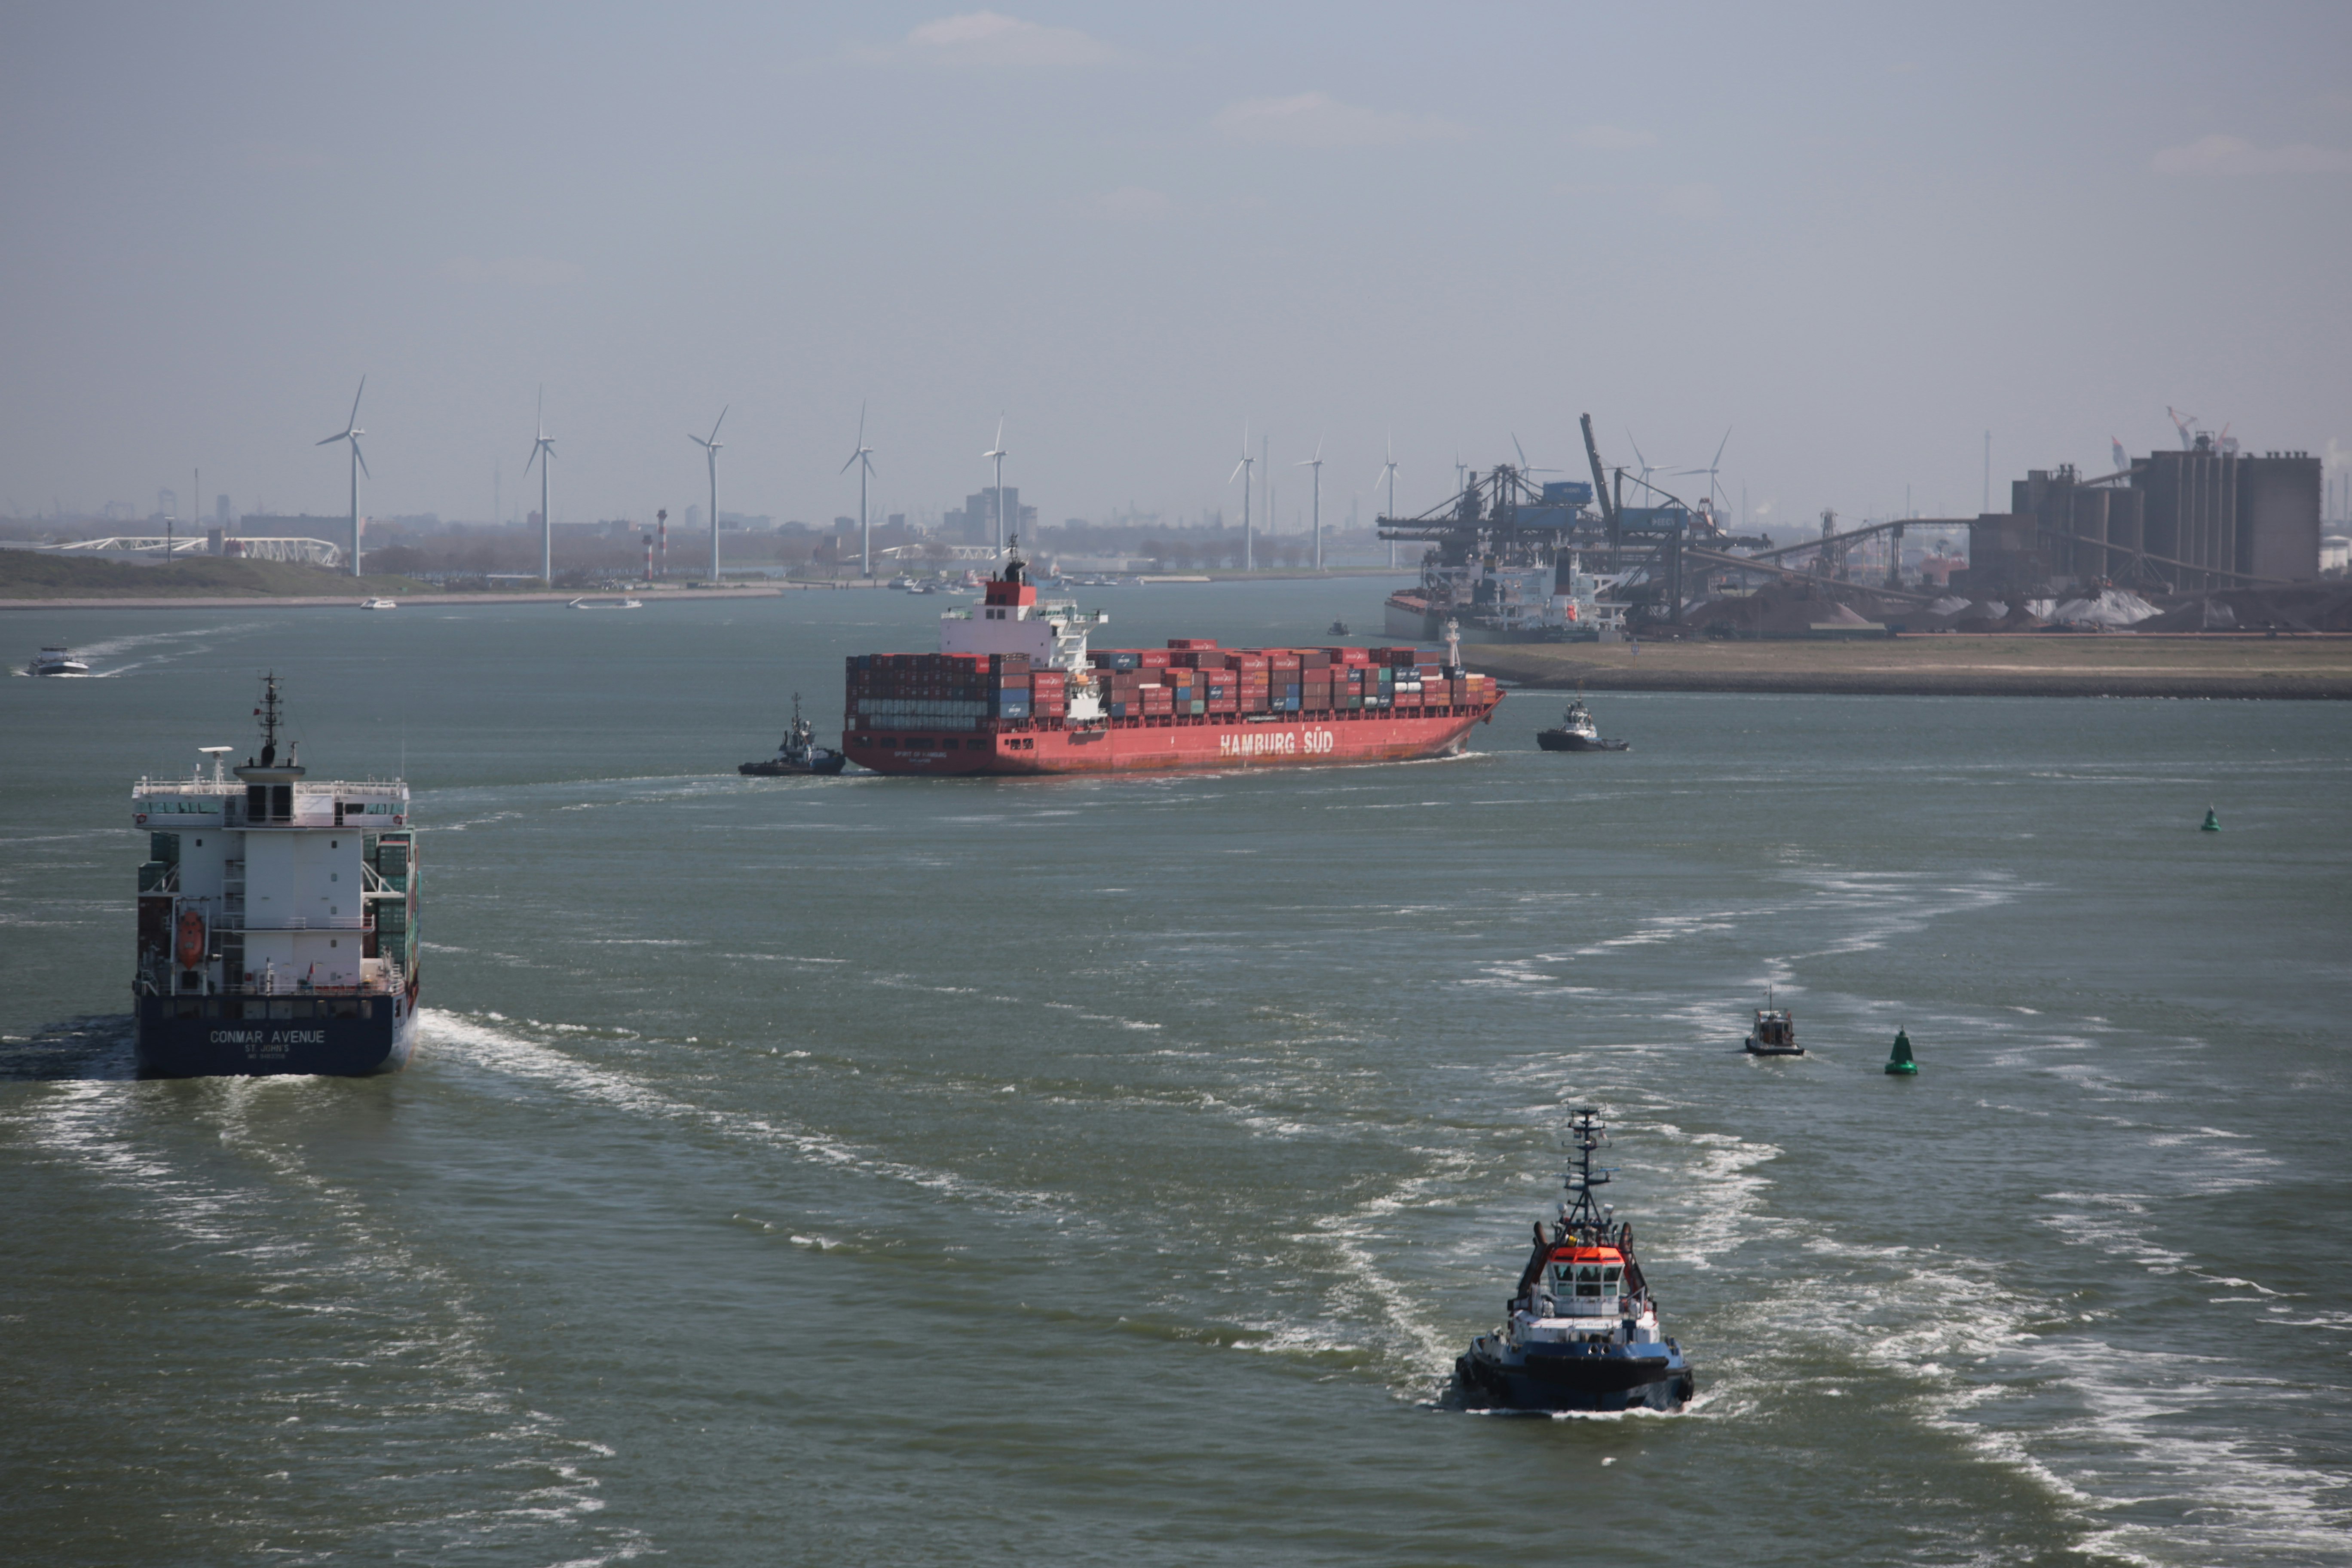 Boat traffic at port of Rotterdam